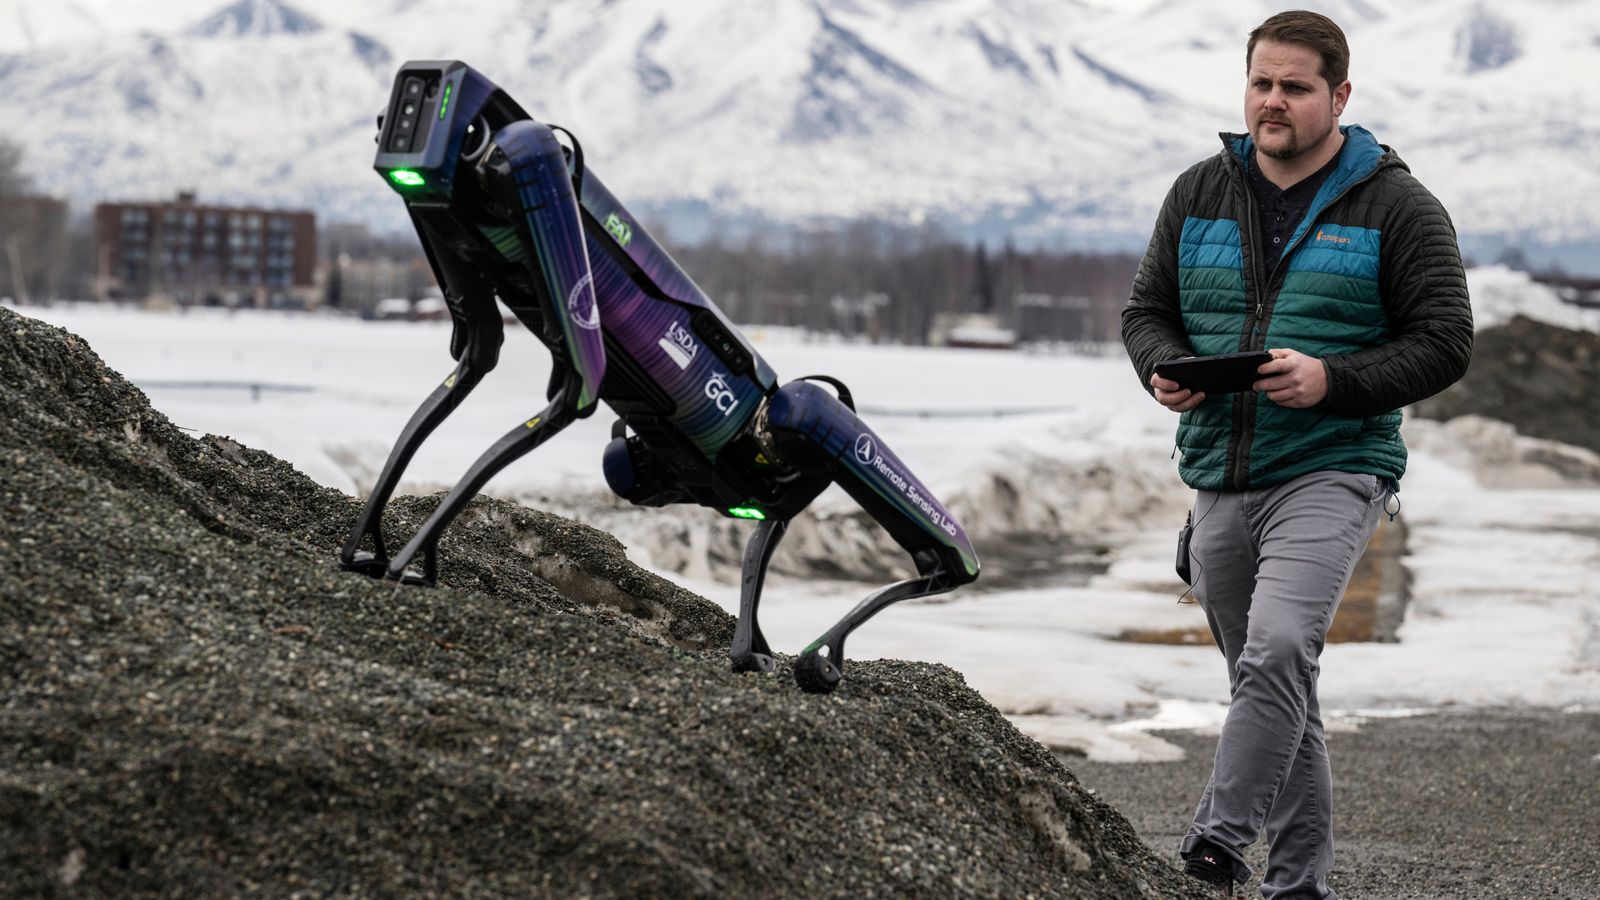 headless, dog-sized robot to patrol airport to prevent bird strikes